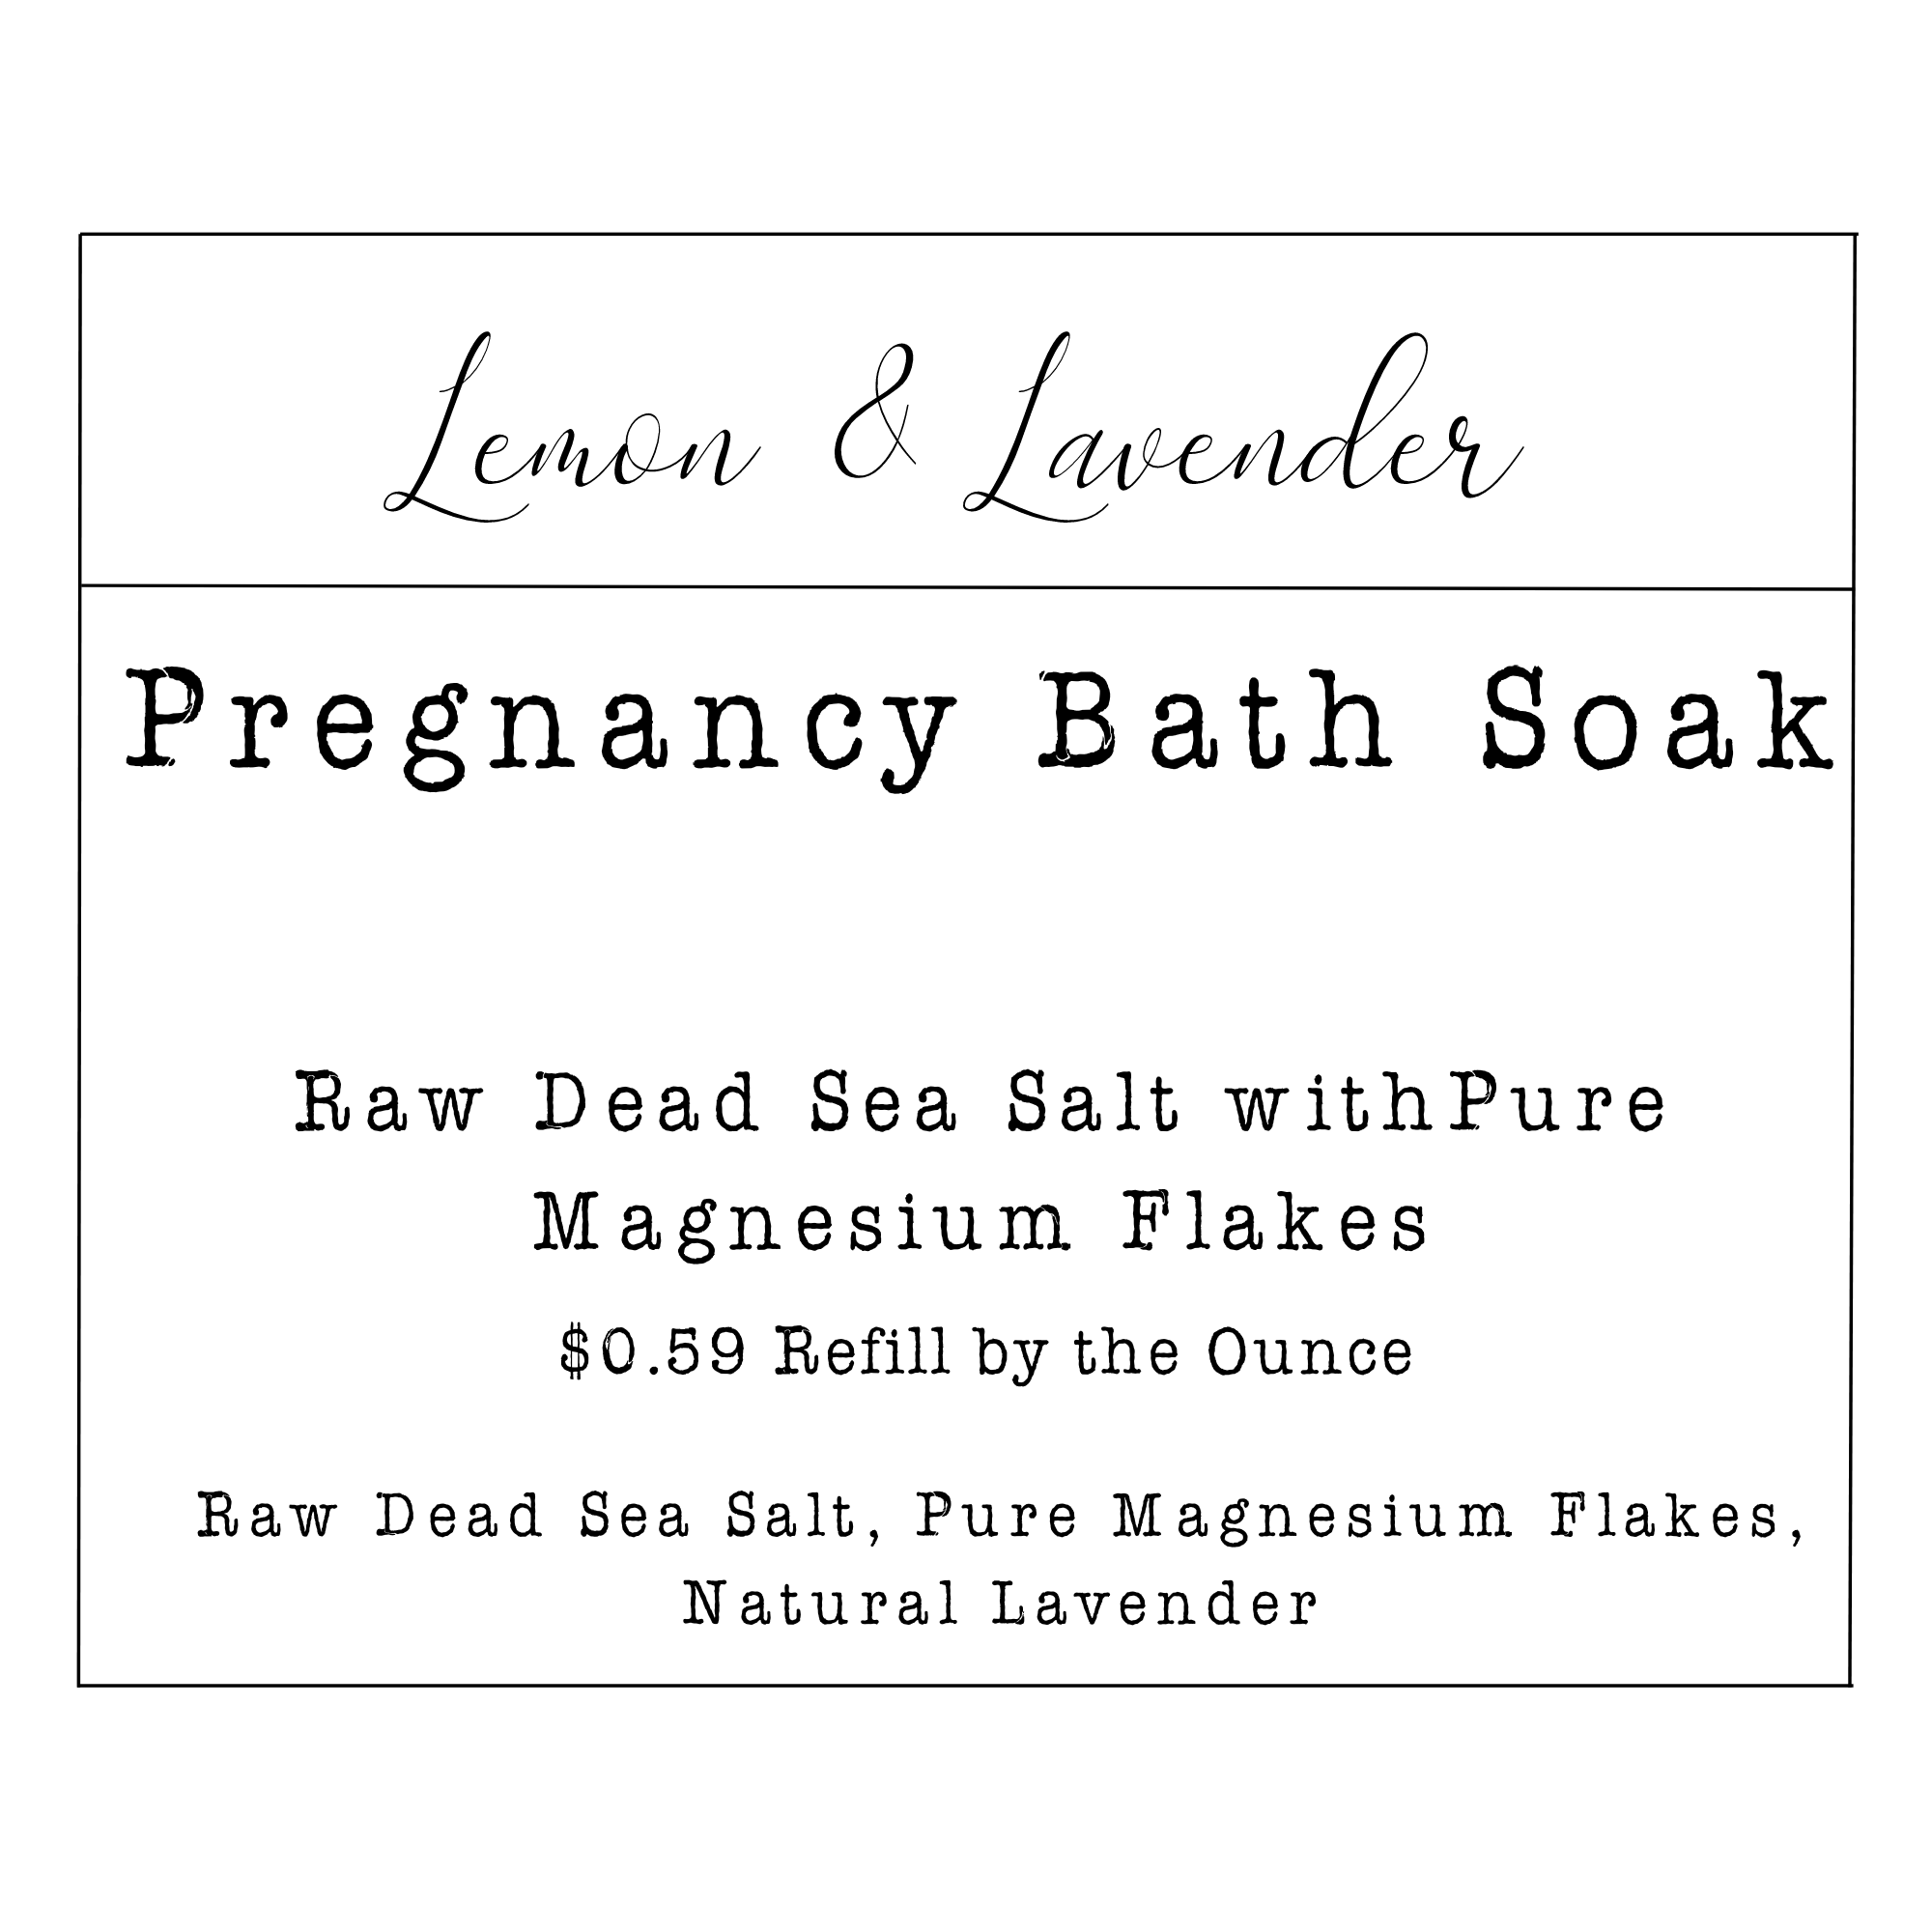 Refill by Ounce - Pregnancy Bath Soak (Magnesium Flakes) - Lemon & Lavender